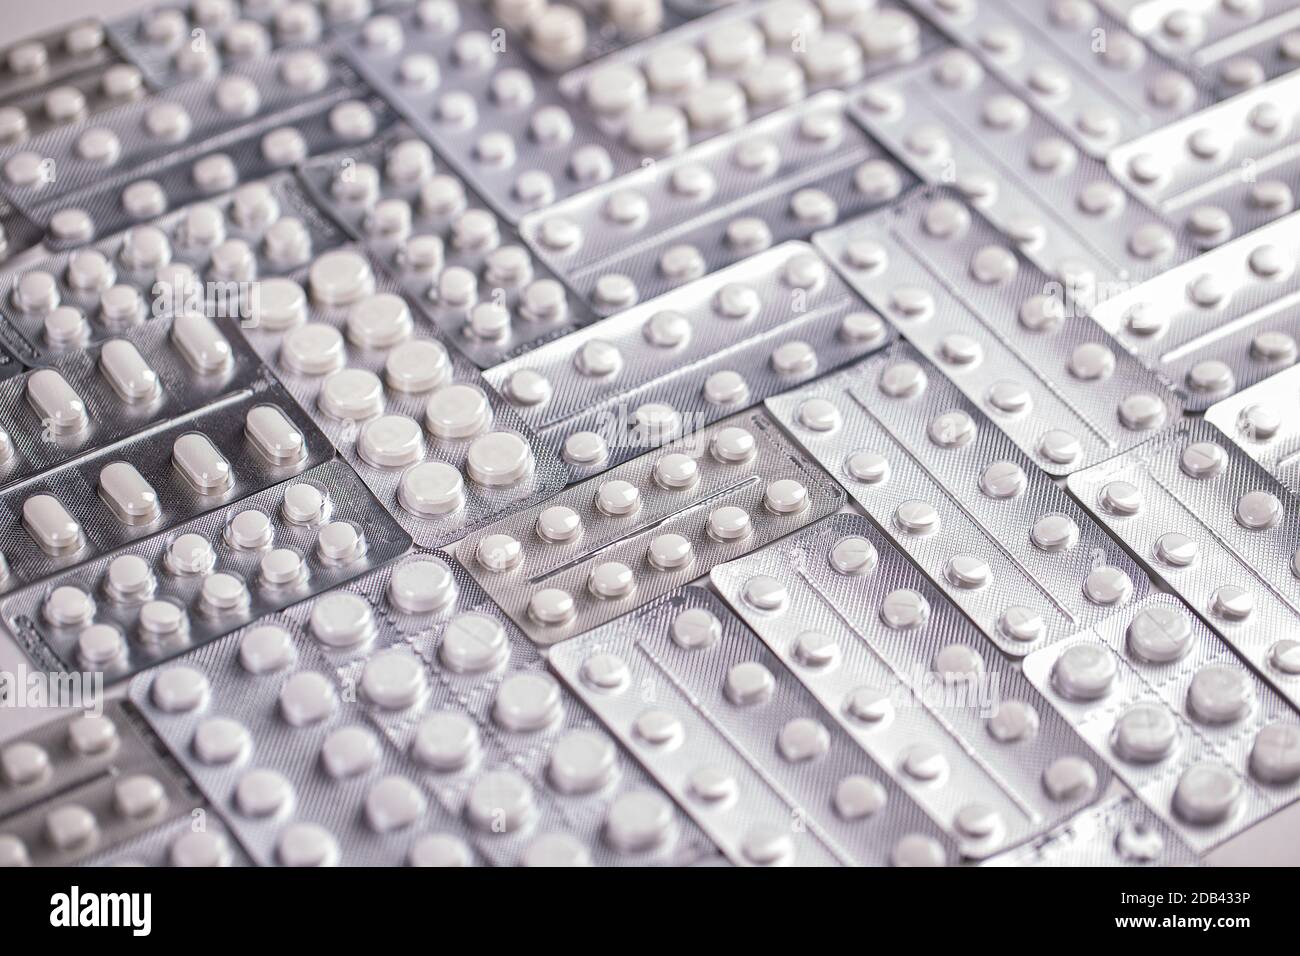 Médicaments comprimés emballés dans des plaquettes thermoformées. Concept médical Banque D'Images